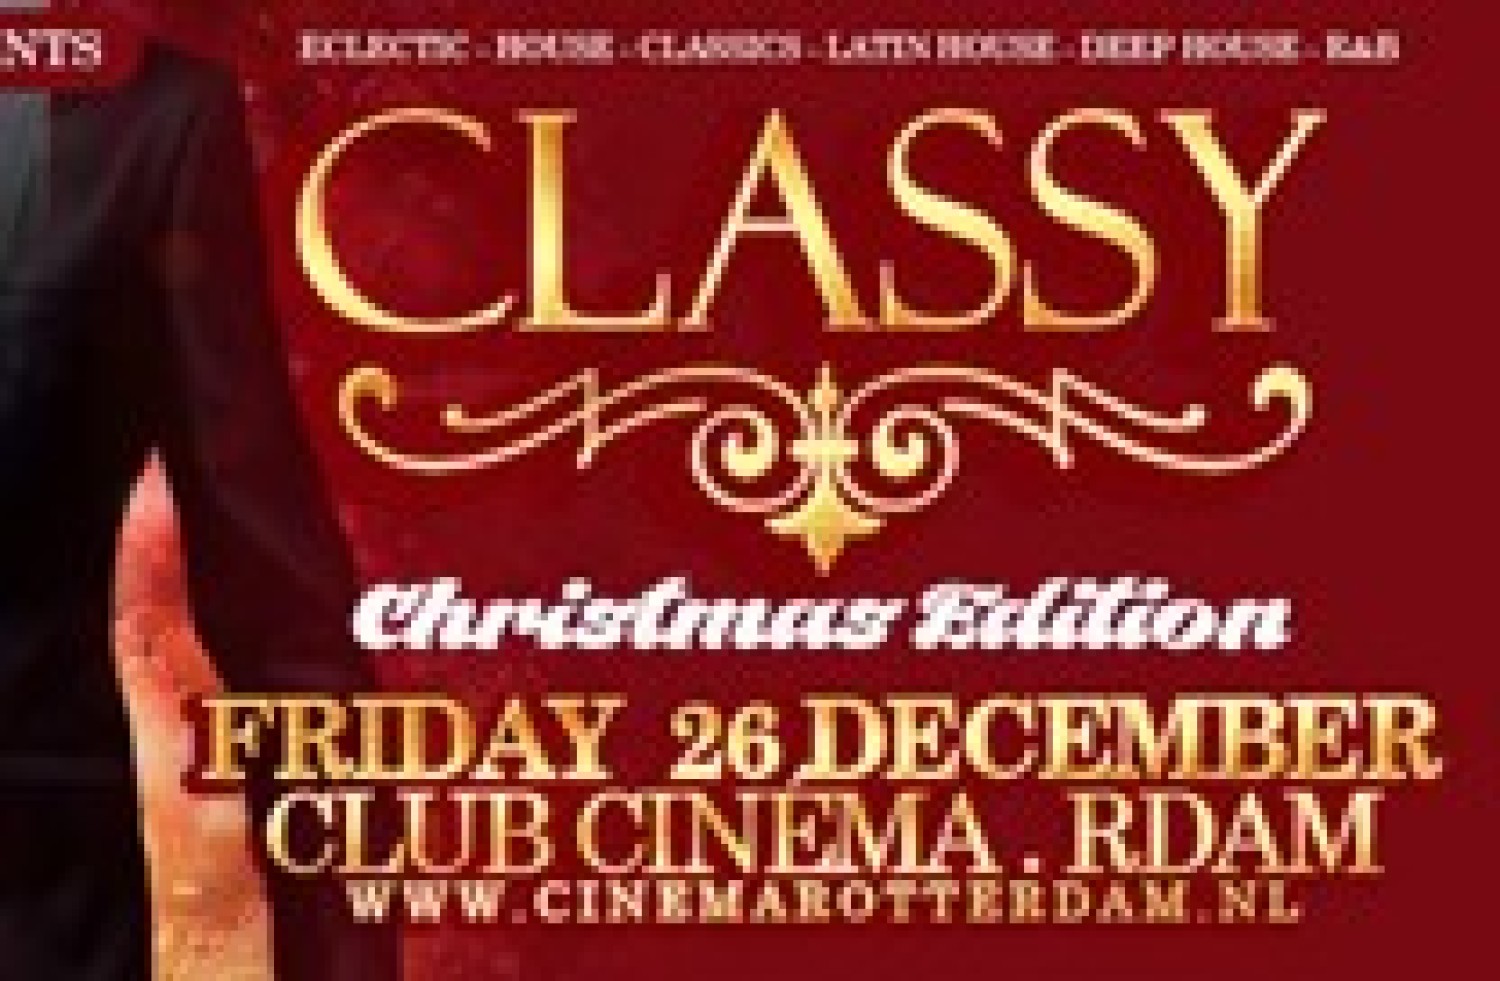 Party nieuws: Classy Christmas Edition op kerstdag in Cinema R'dam